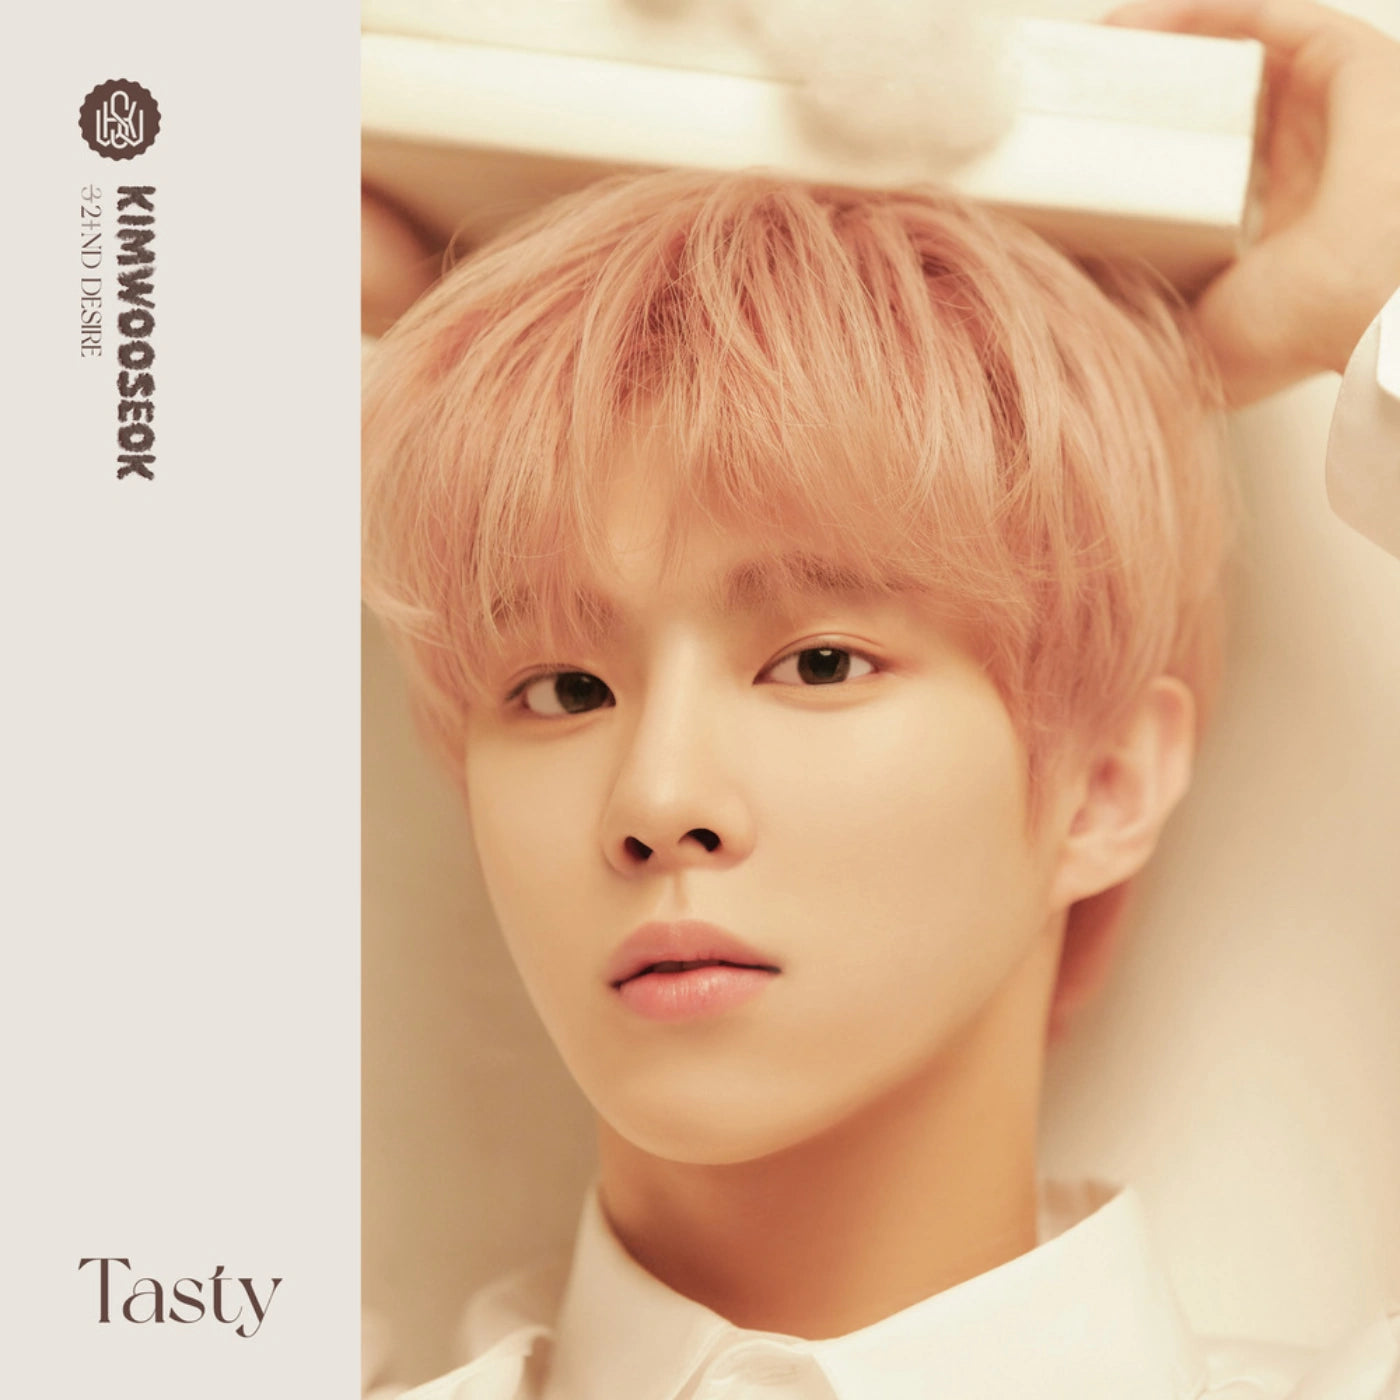 Kim Woo Seok - 2nd Desire: Tasty